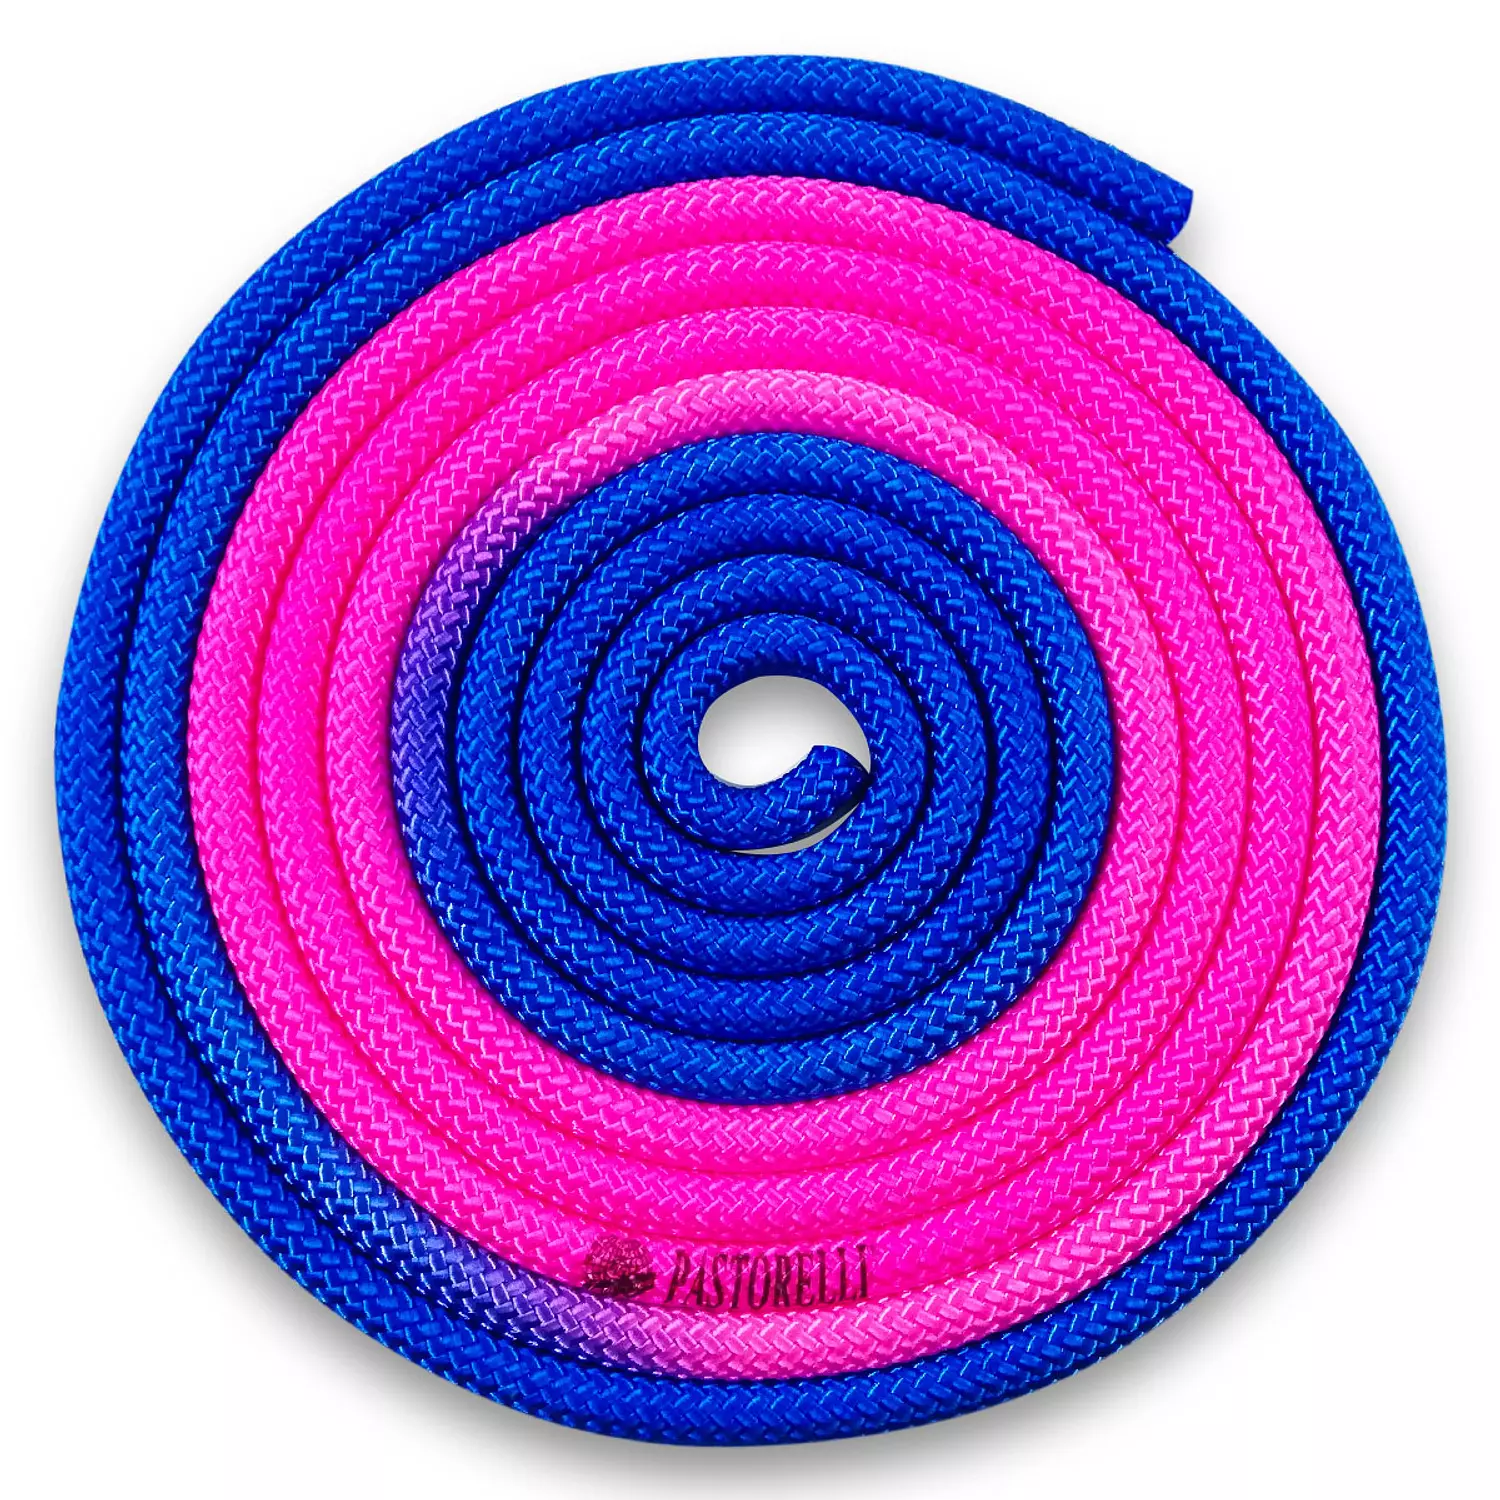 Pastorelli-New Orleans multicolor rope FIG 3m 9